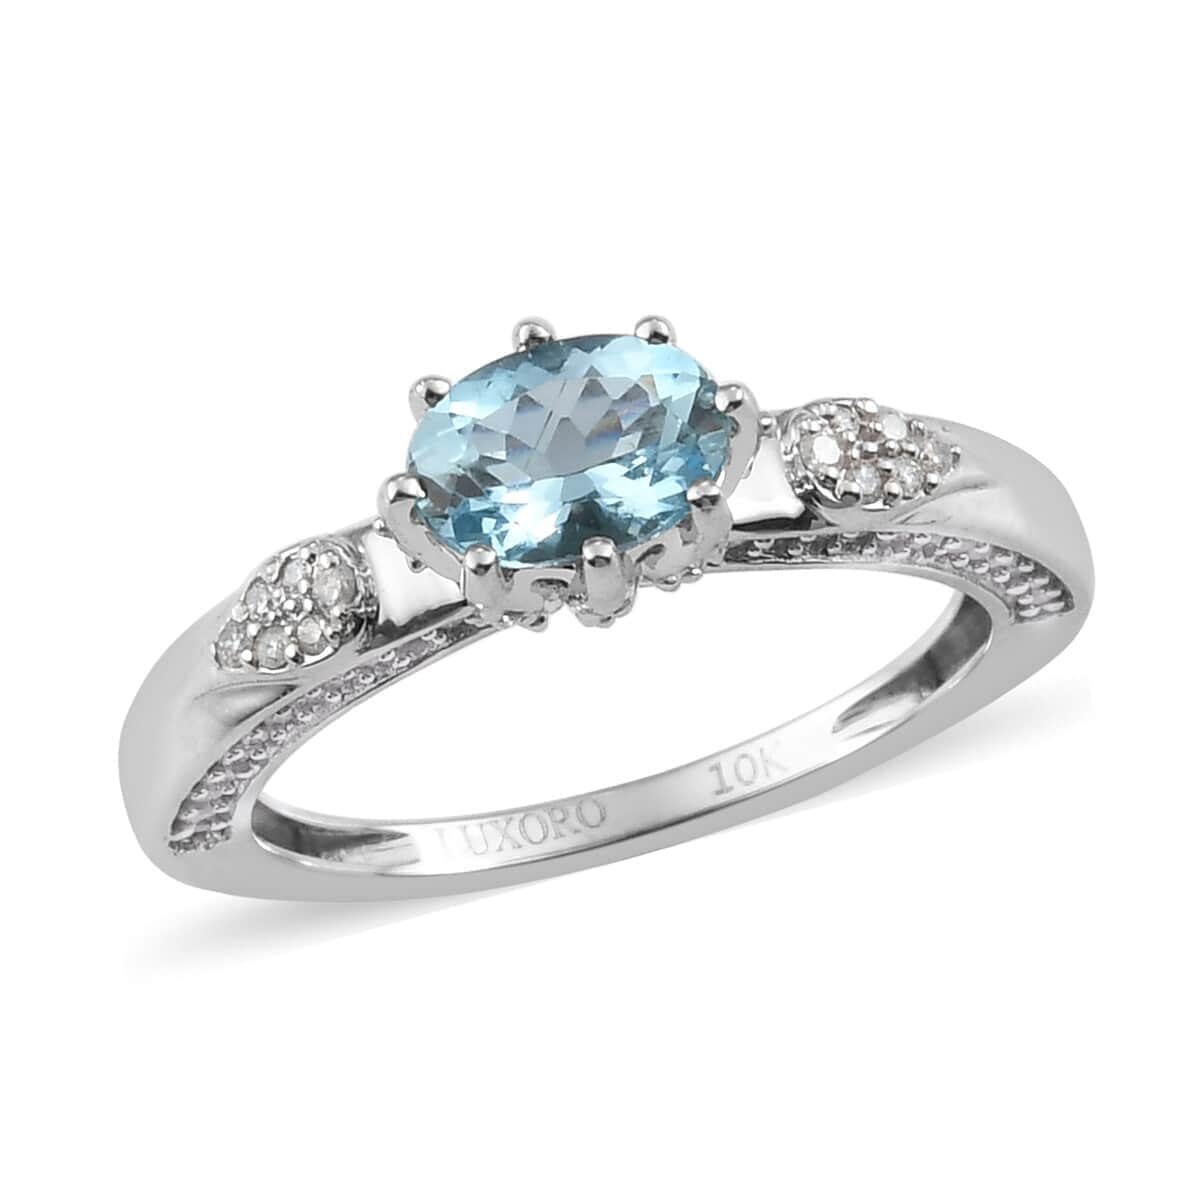 Luxoro 10K White Gold Premium Santa Maria Aquamarine and Diamond Ring (Size 9.0) 1.10 ctw image number 0